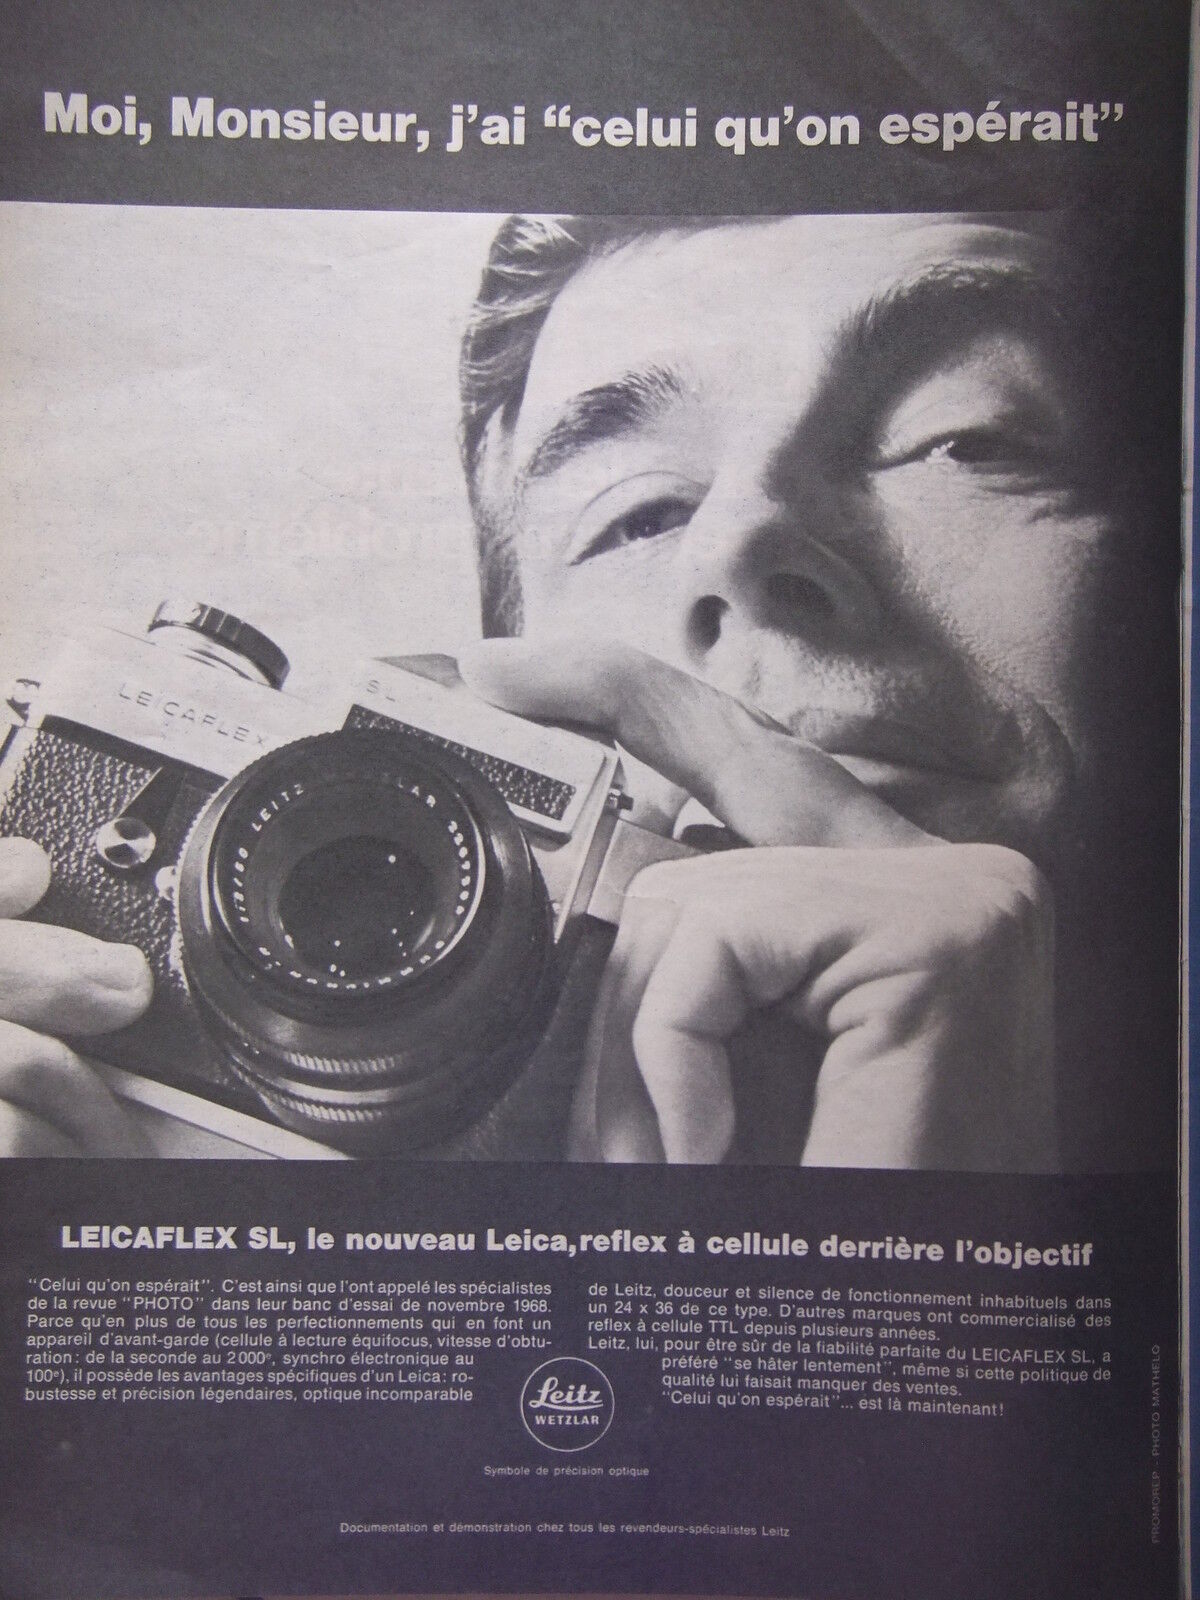 1969 LEICAFLEX SL LEICA REFLEX BEHIND LENS ADVERTISING - AD